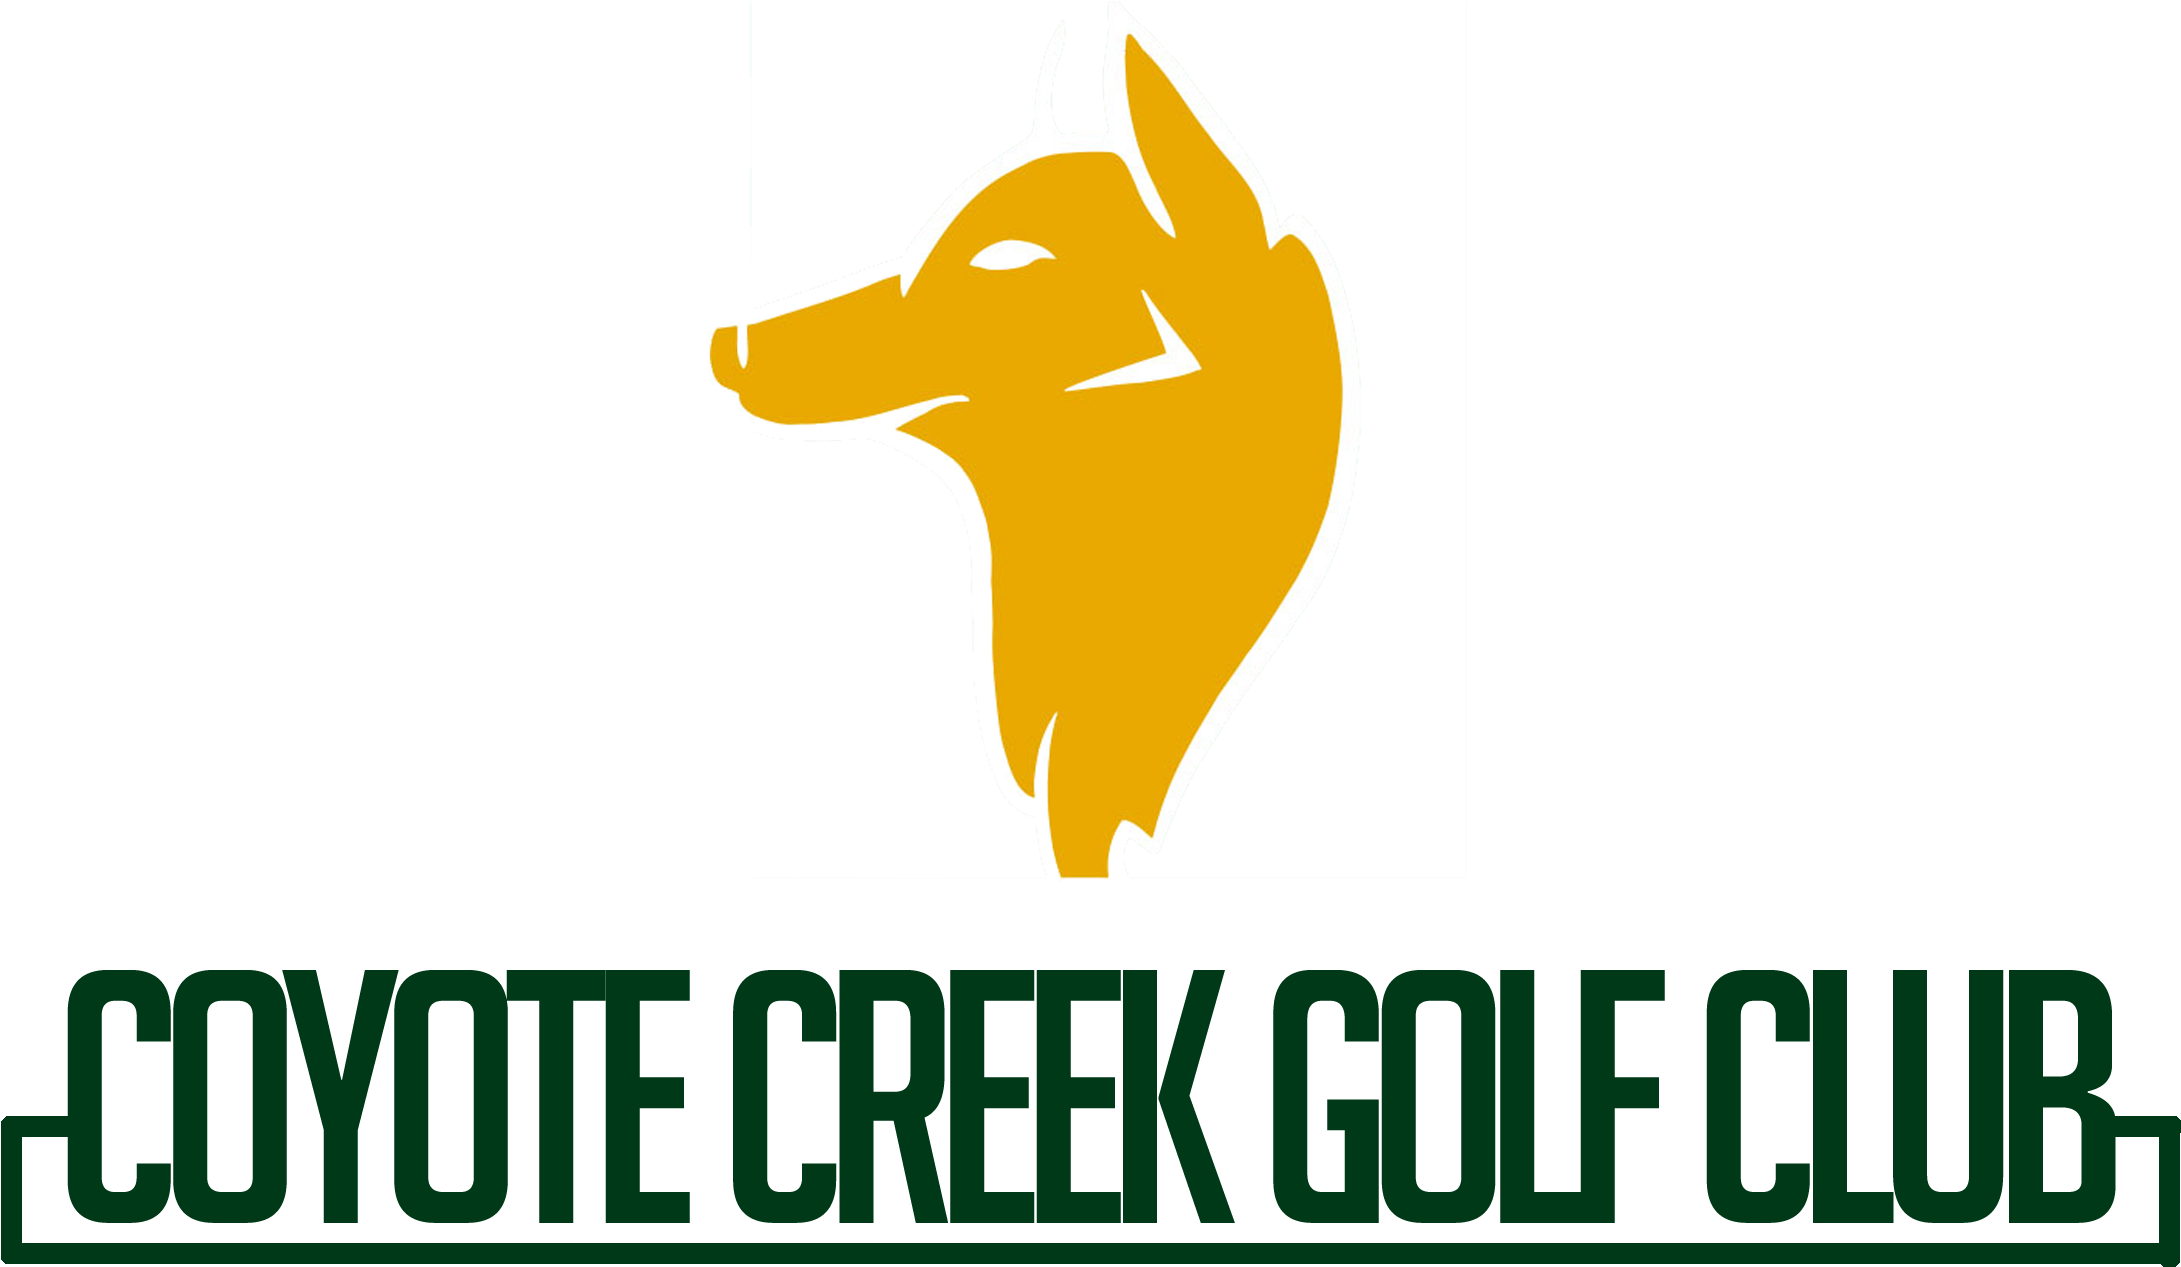 Coyote Creek Golf Club (2252x1298)